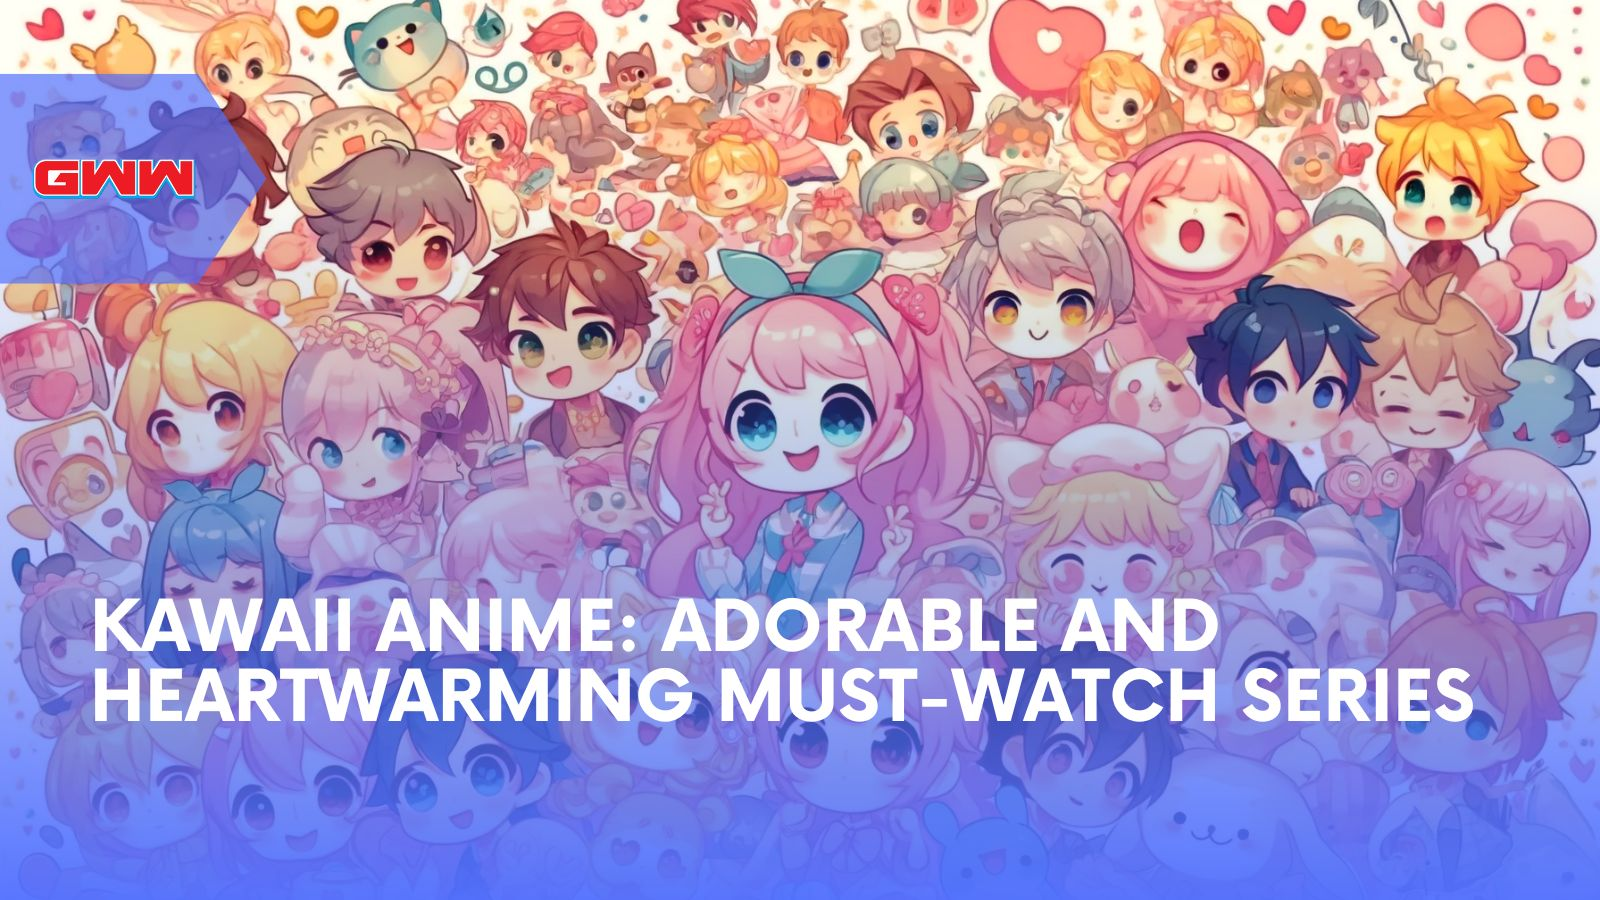 Kawaii Anime: Adorable and Heartwarming Must-Watch Series